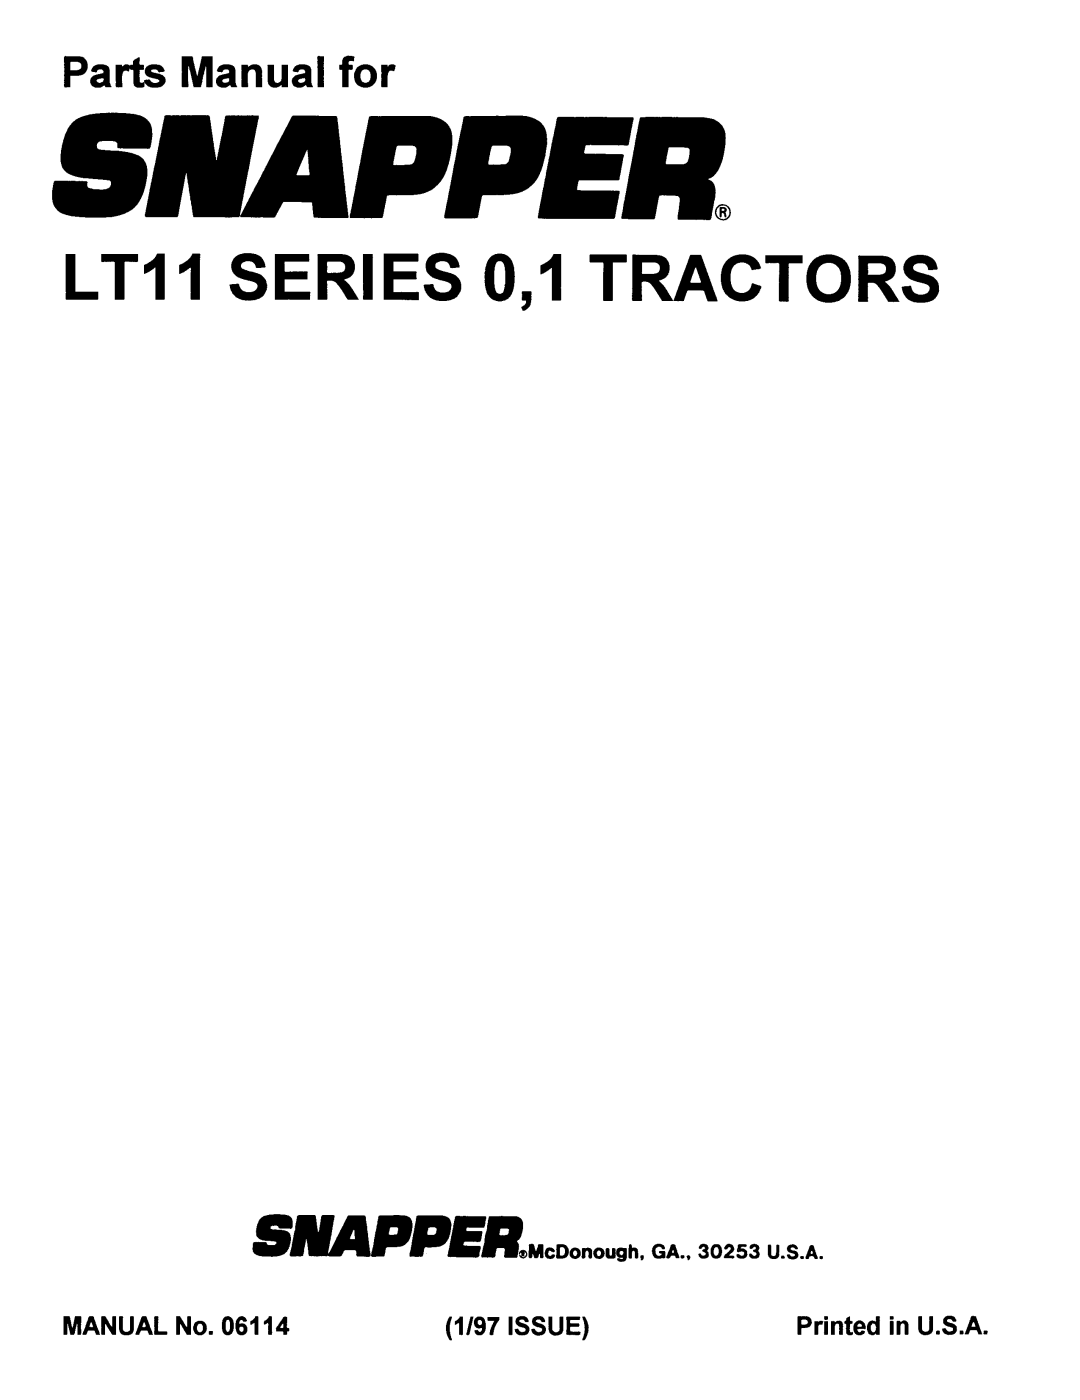 Snapper LT11 SERIES 0.1, LT11 Series 1 manual 